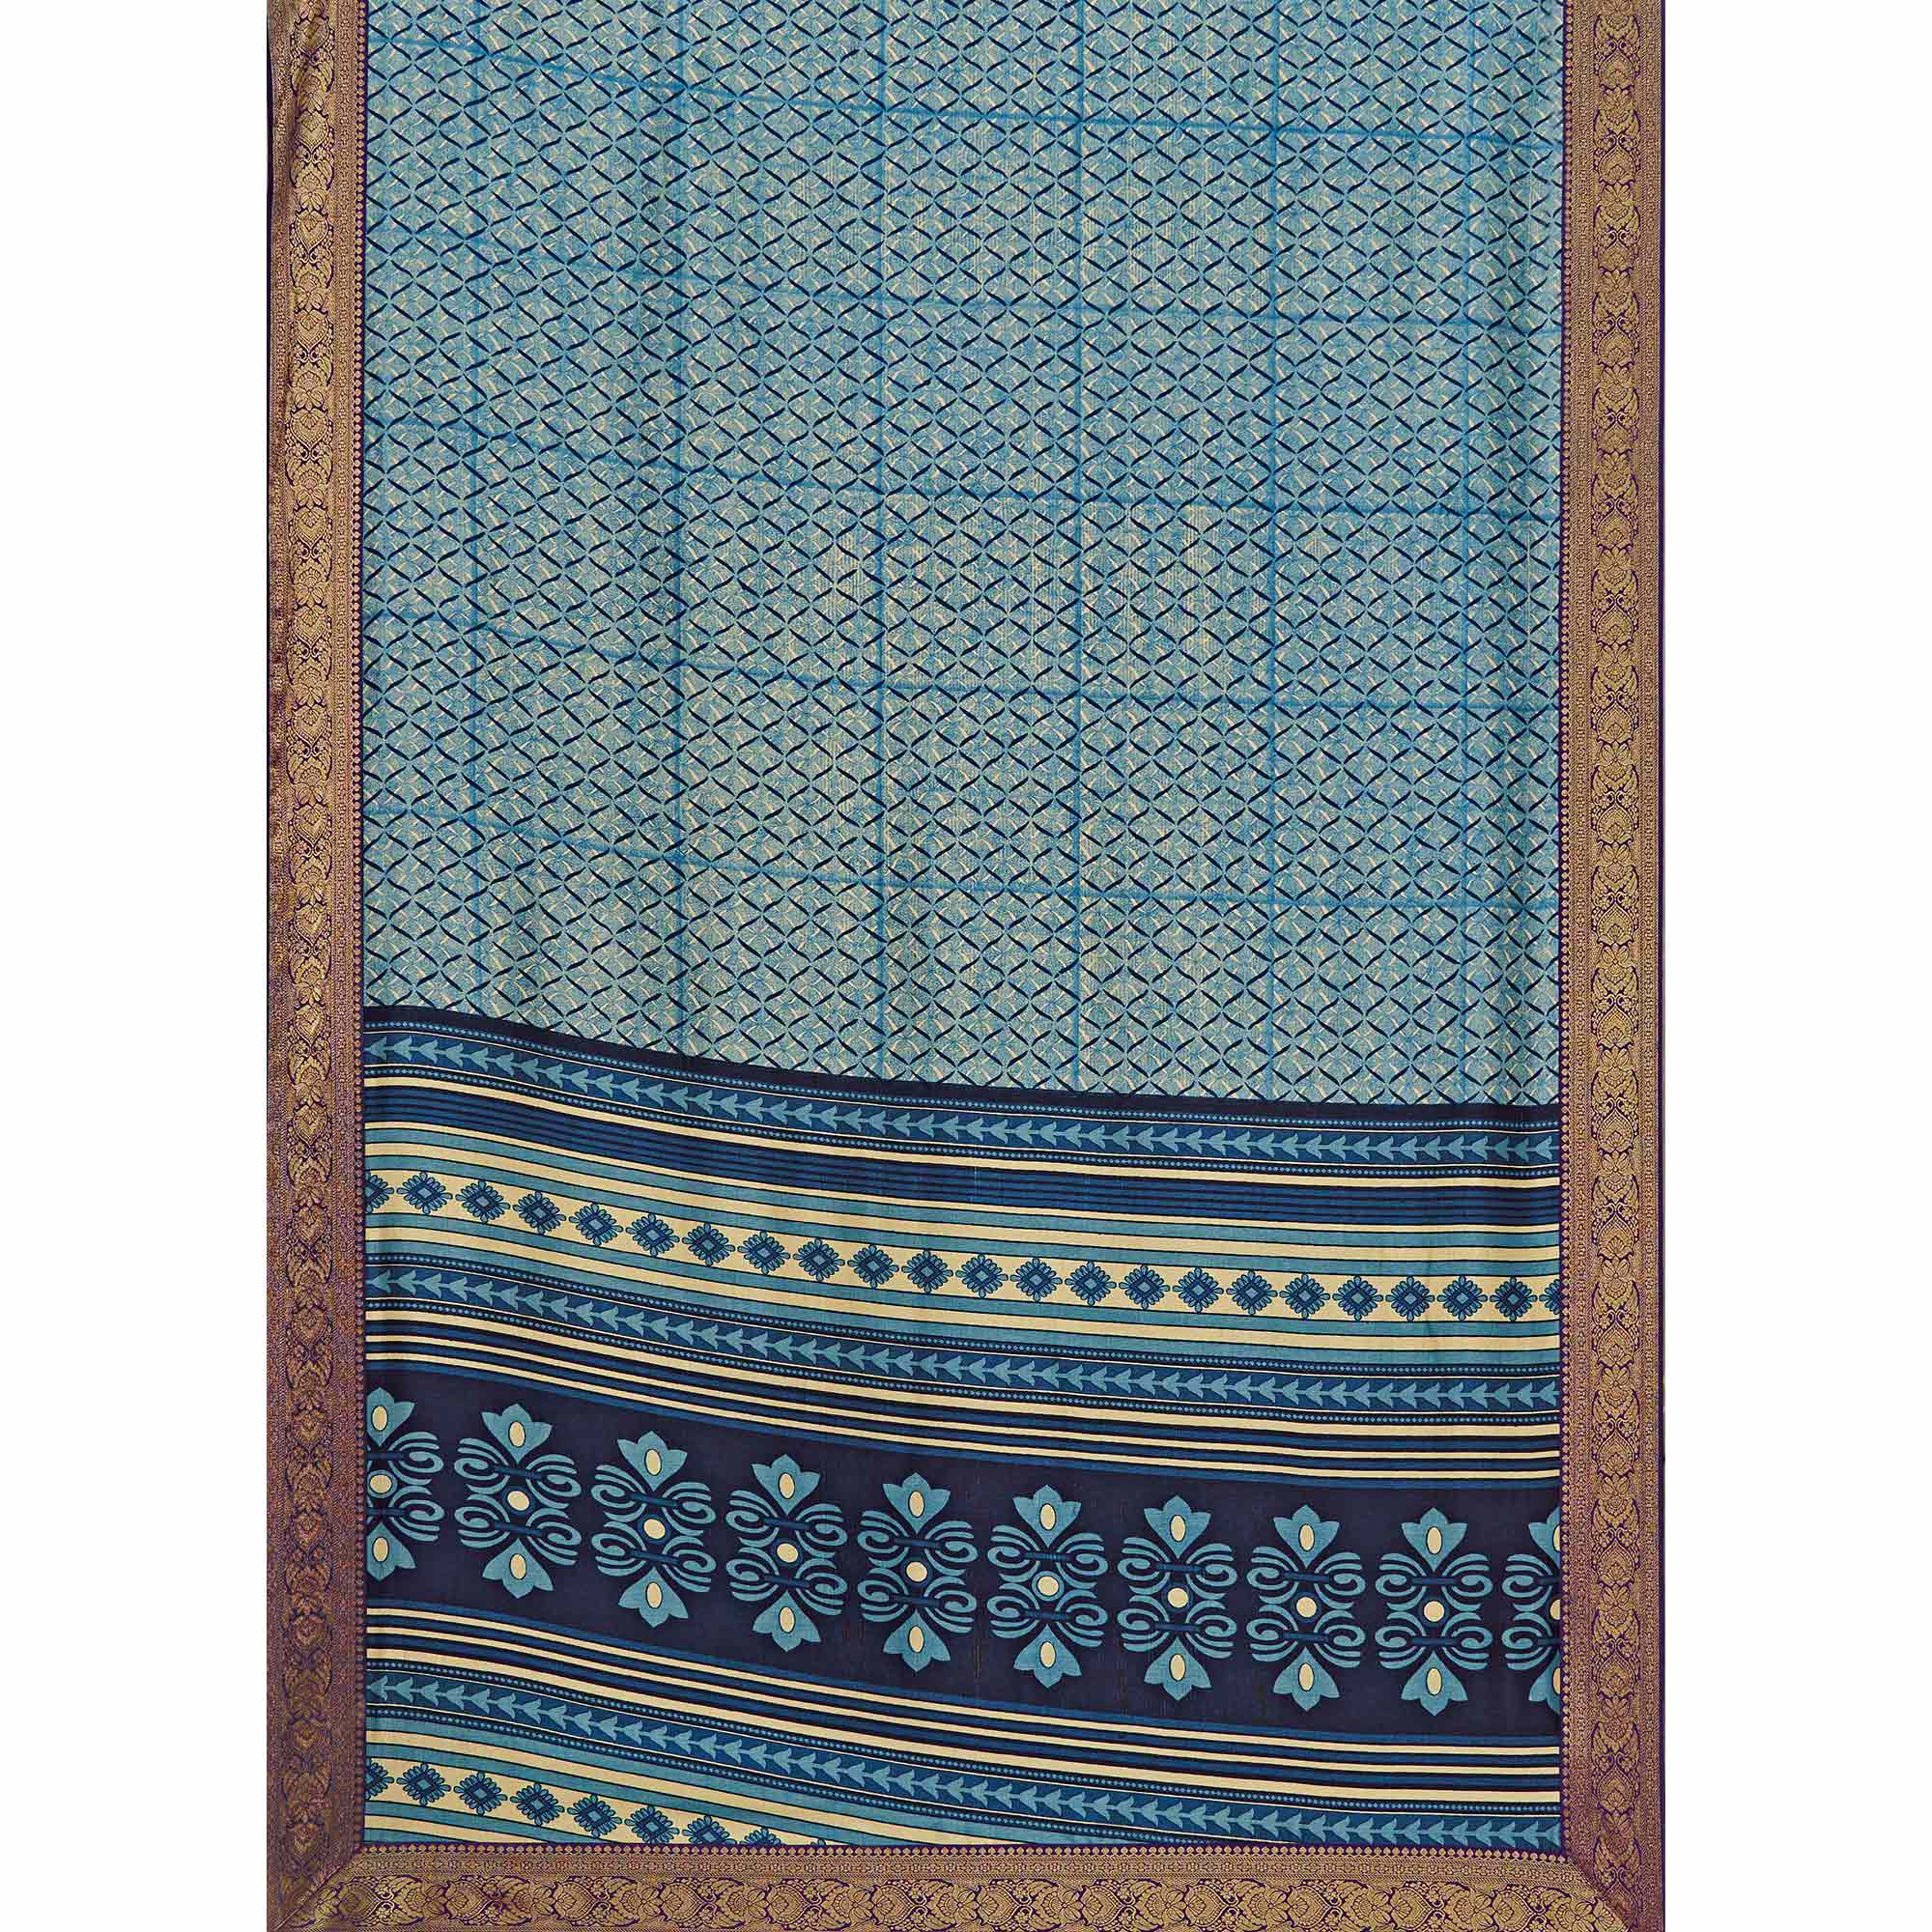 Multicolor Printed With lace Border Tussar Silk Saree